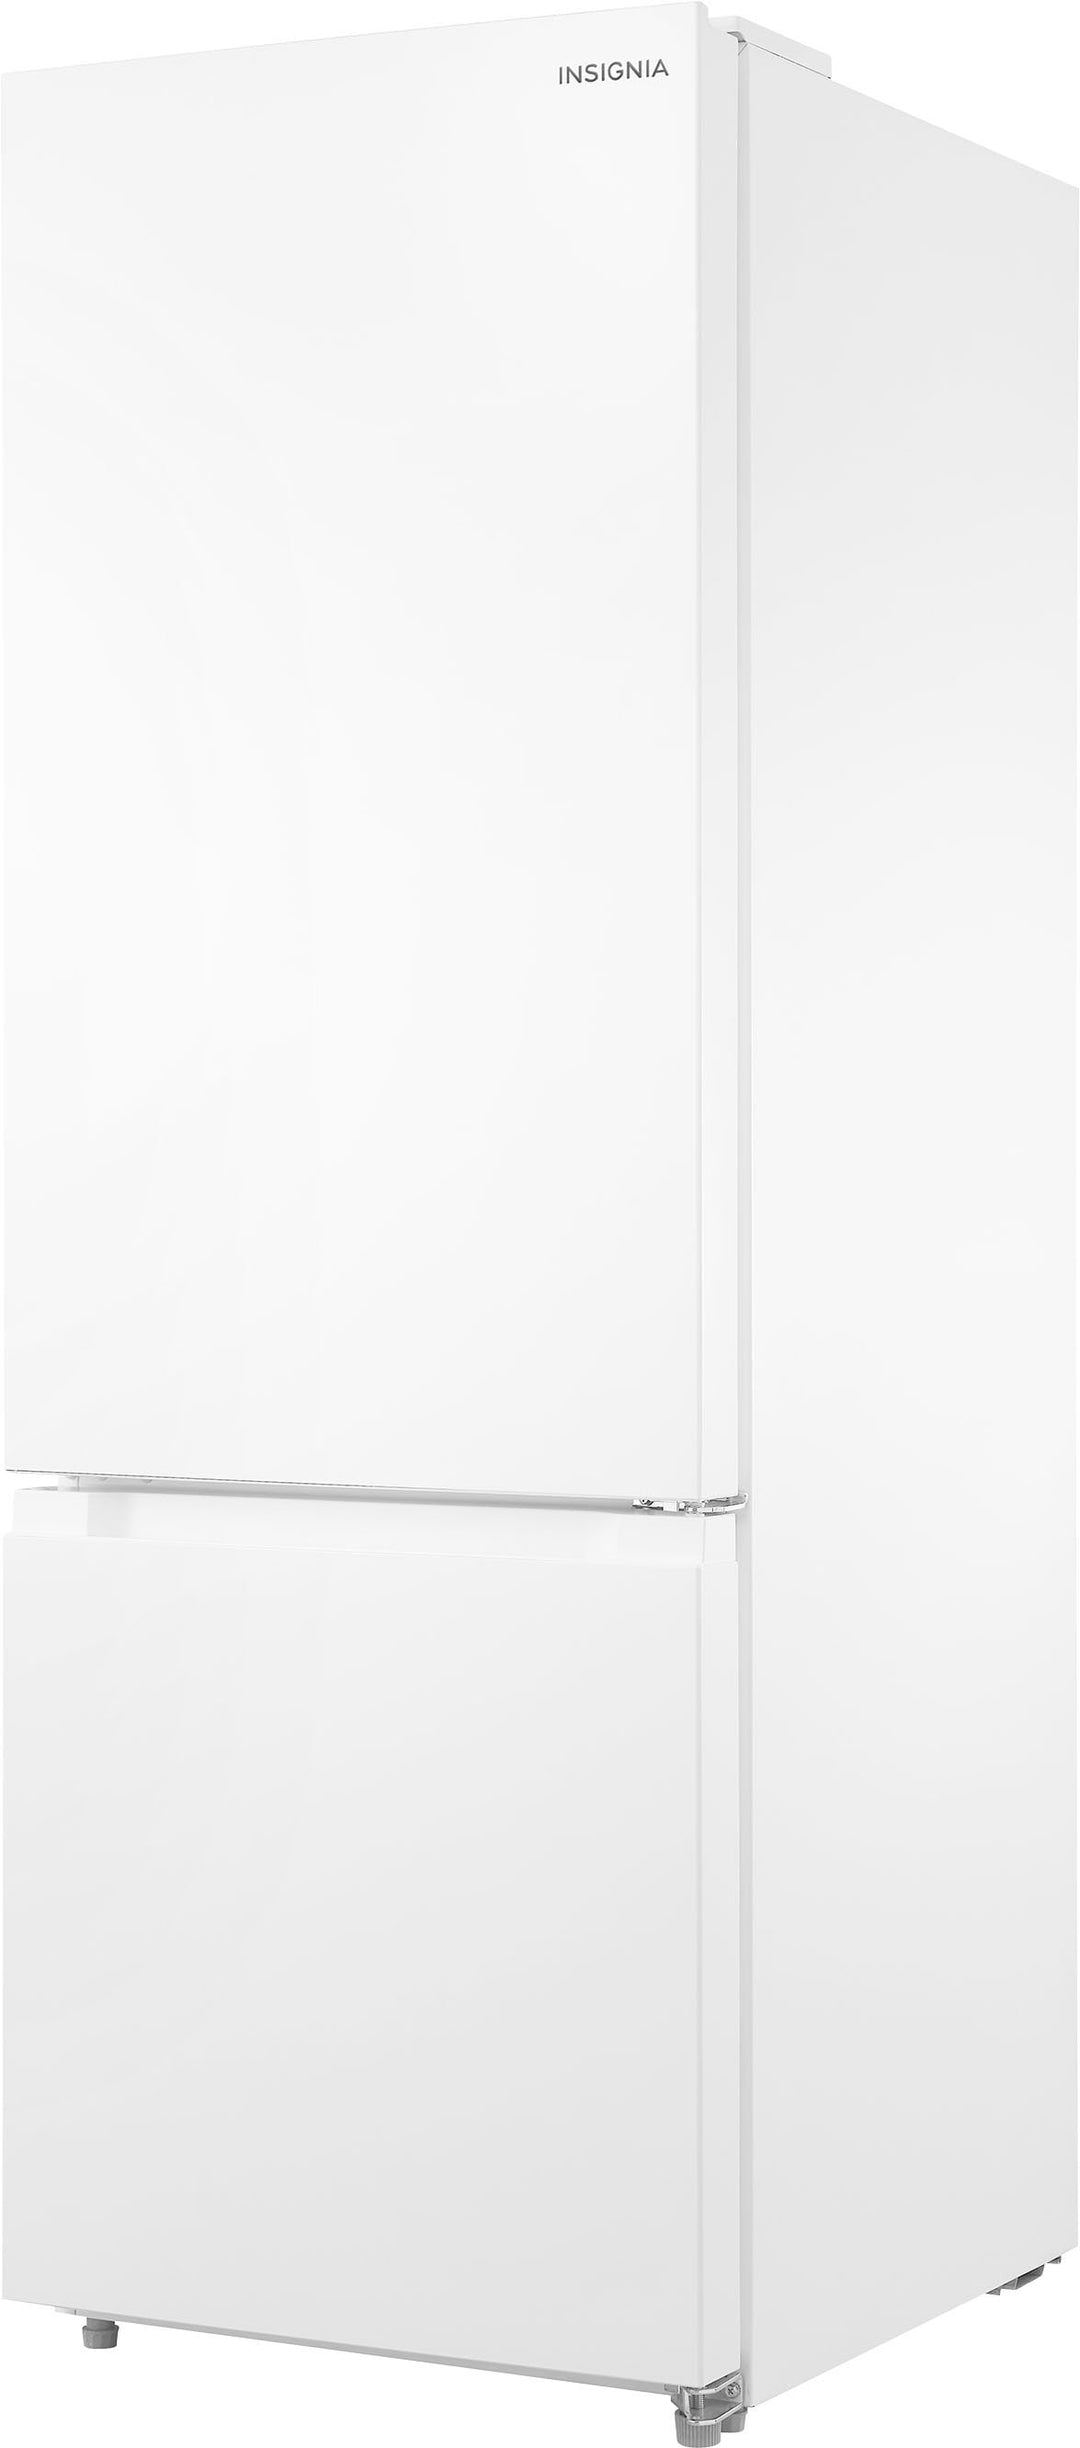 Insignia™ - 11.5 Cu. Ft. Bottom Mount Refrigerator - White_2